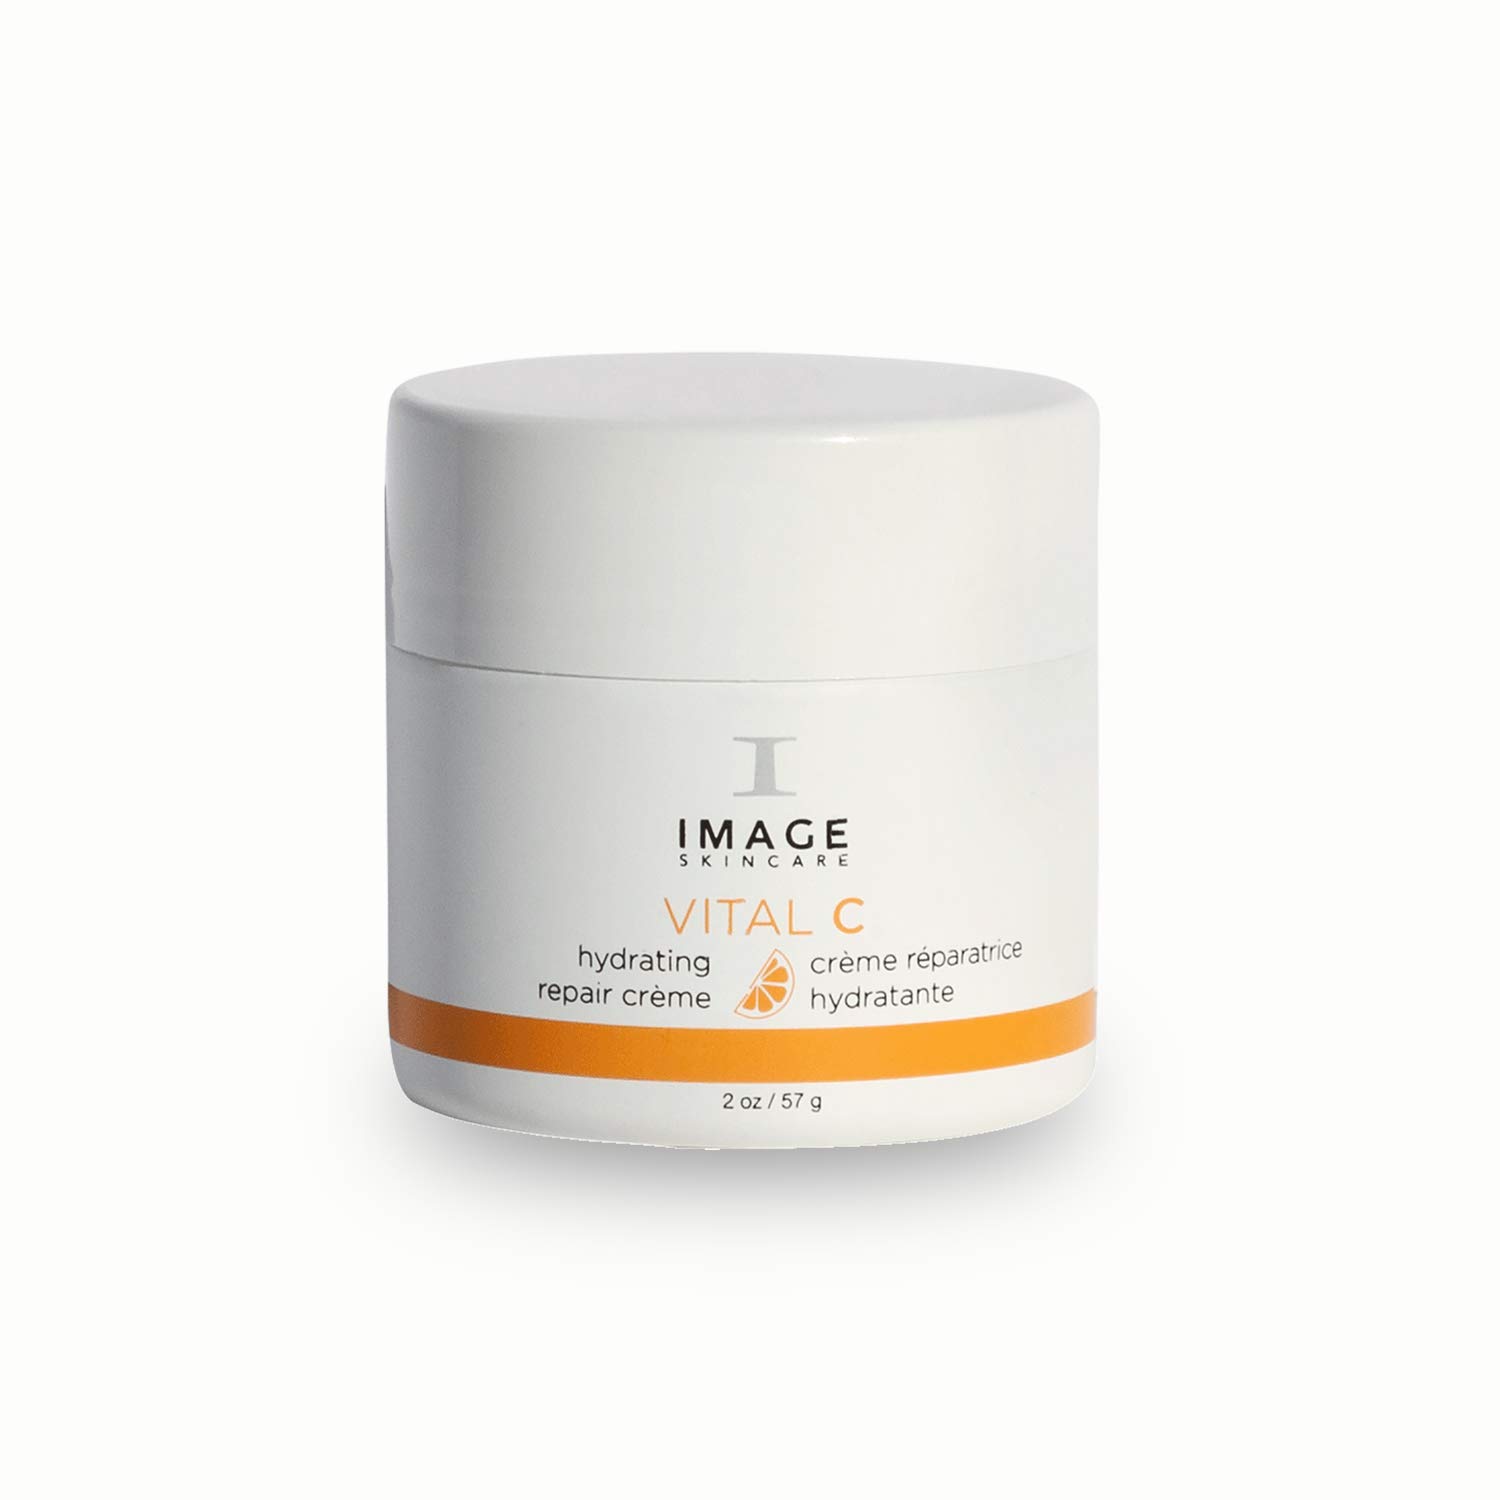 Image Skincare Vital C Hydrating Repair Cream - 2 oz